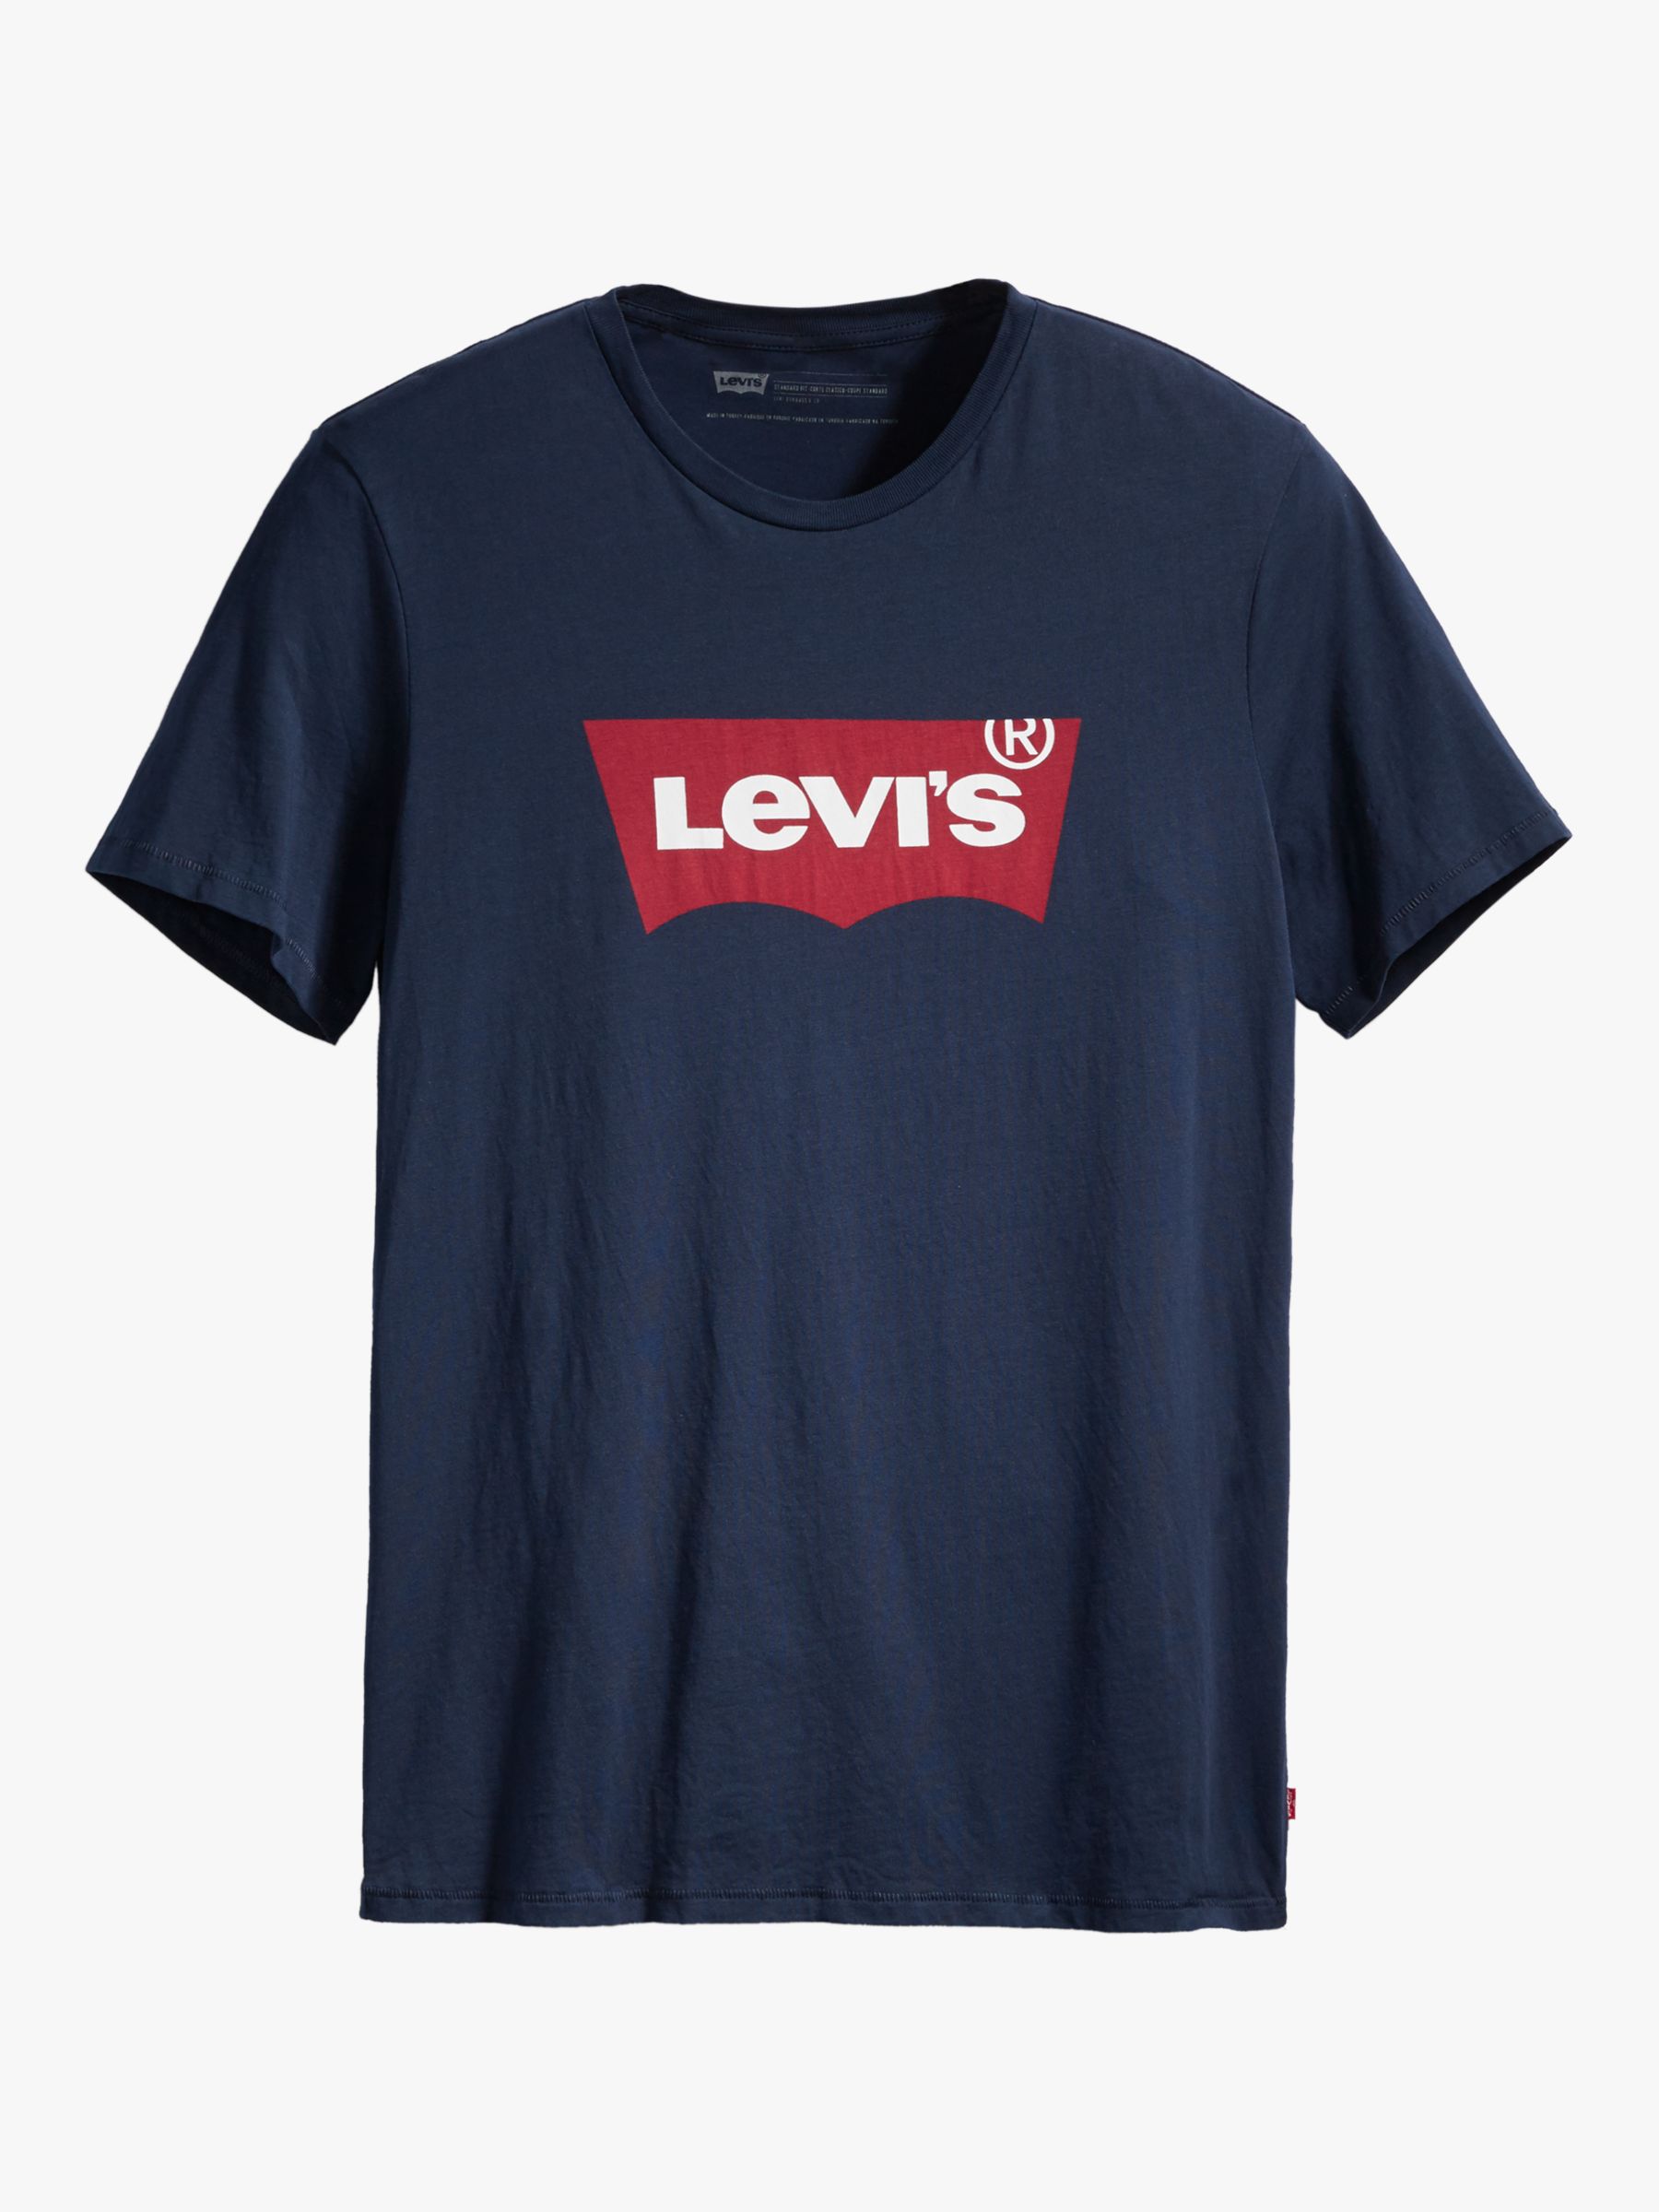 Levi's Batwing Graphic Logo T-Shirt, Dress Blues at John Lewis & Partners